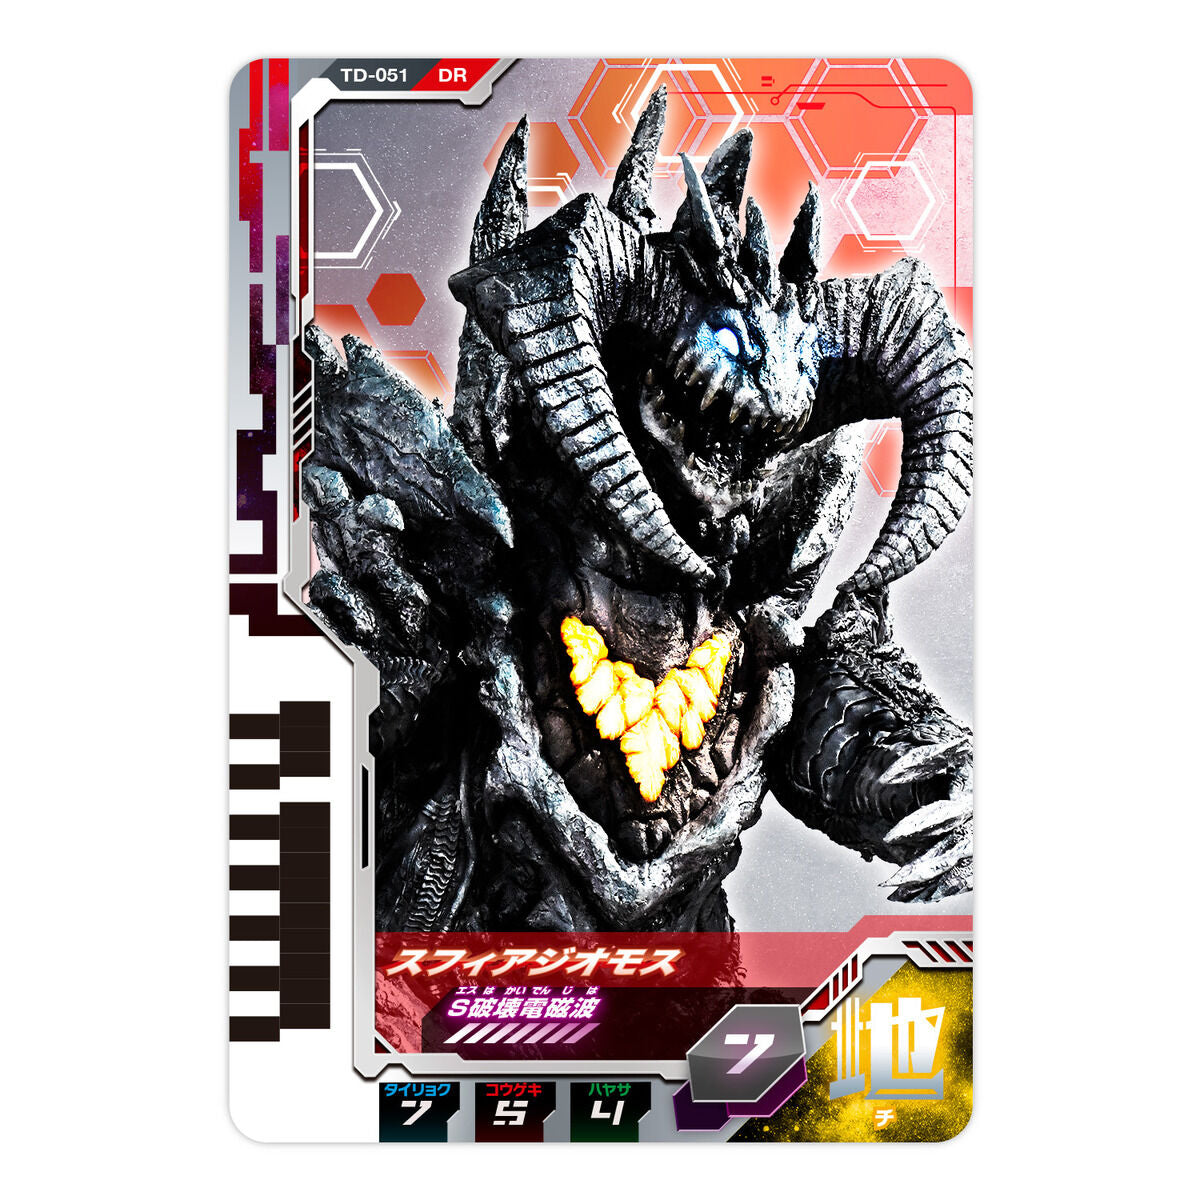 Ultra Dimension Card Set 07 - Ultraman Dyna Set